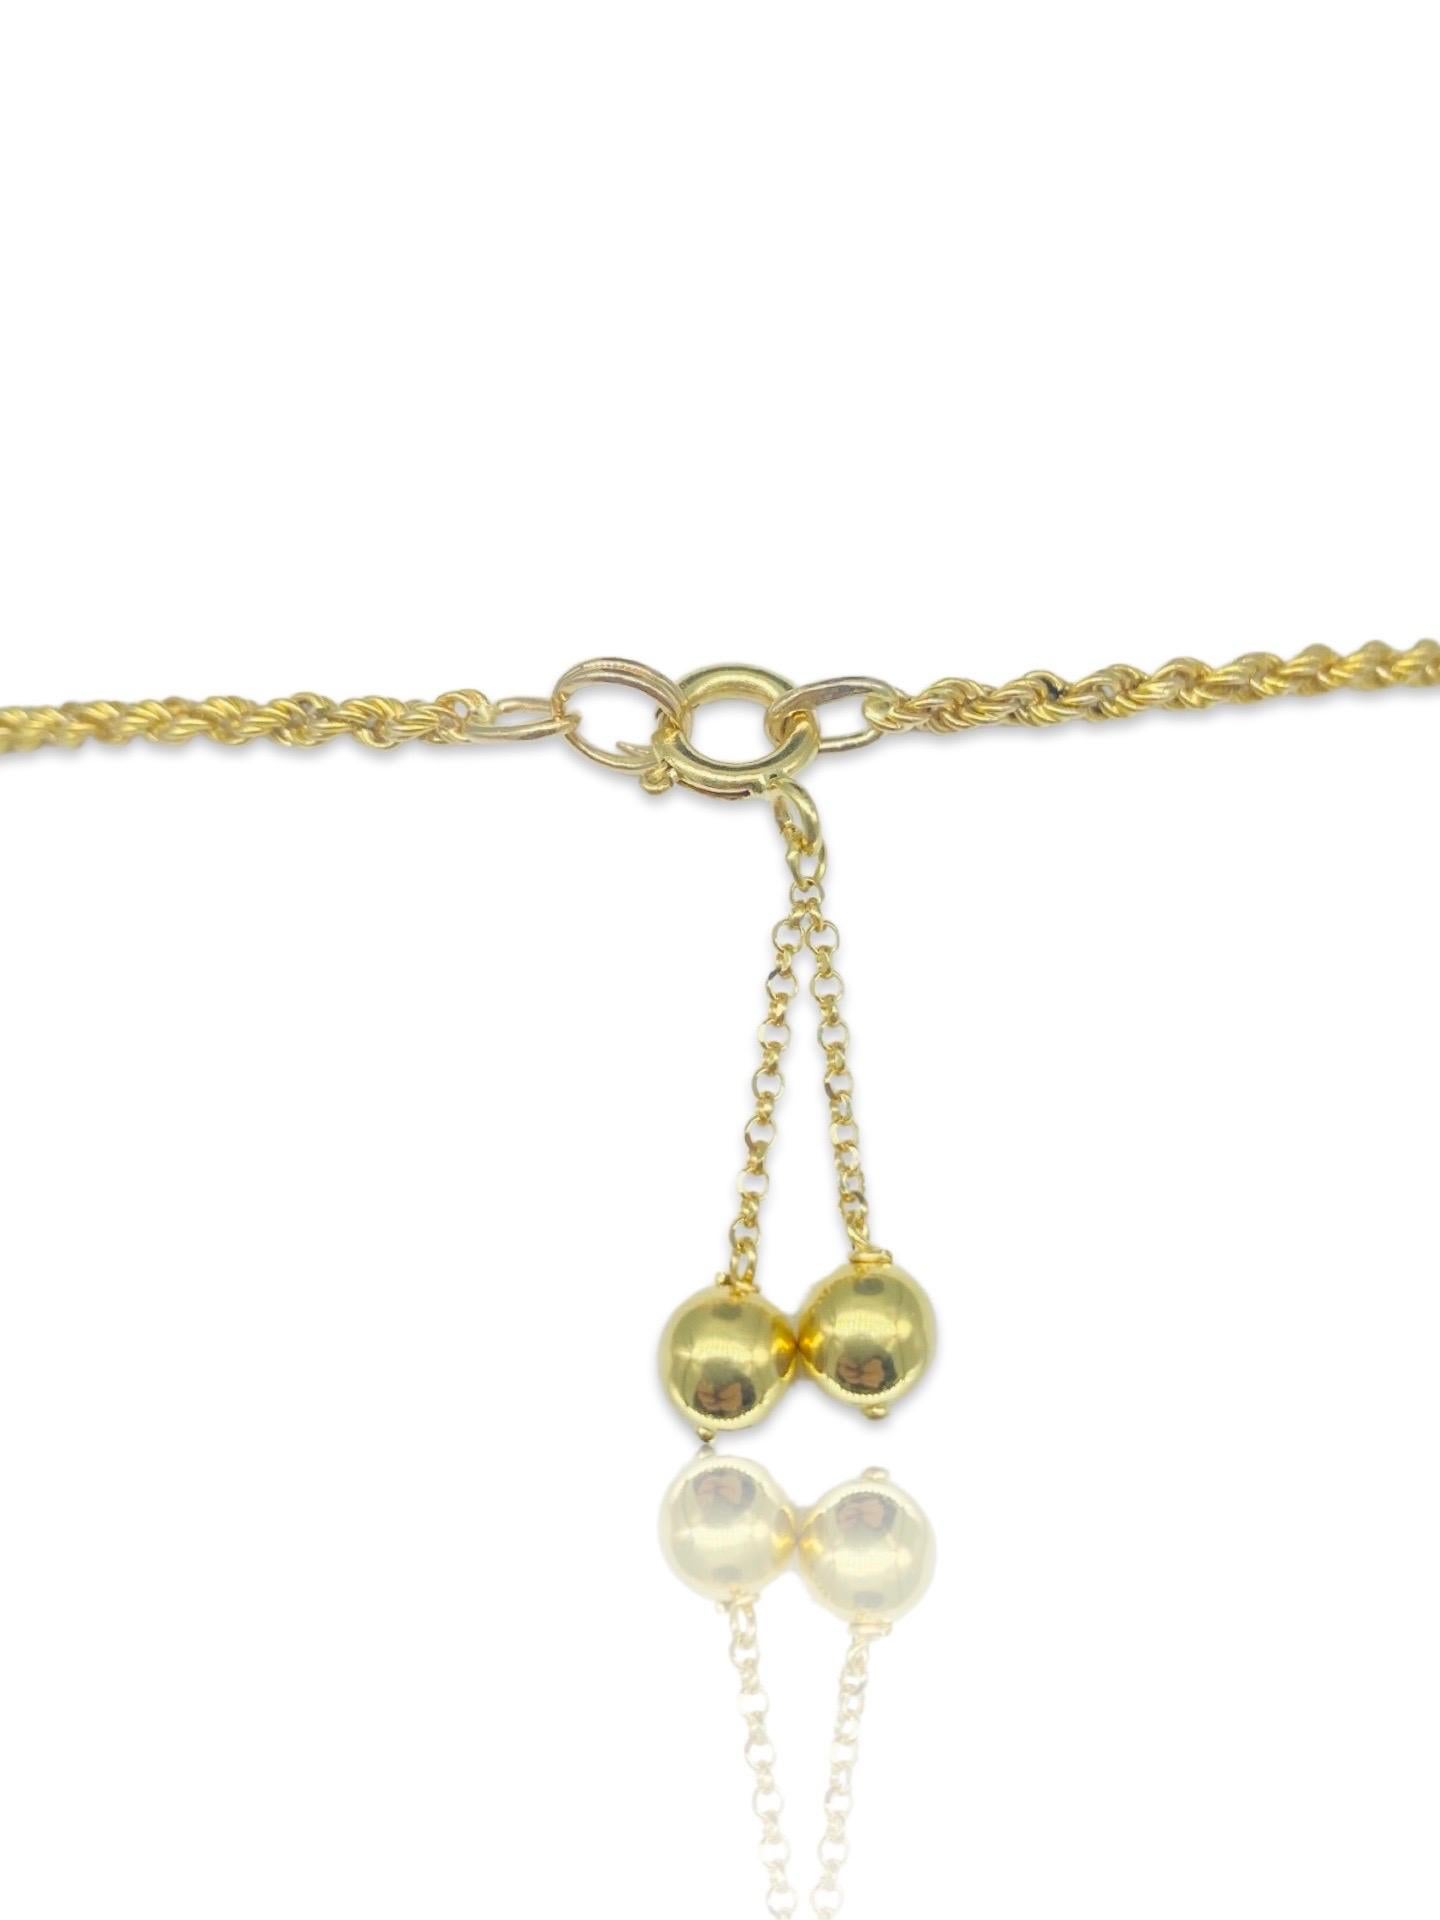 Women's or Men's Vintage 5mm Graduating Rope Twist Necklace 18k Gold For Sale